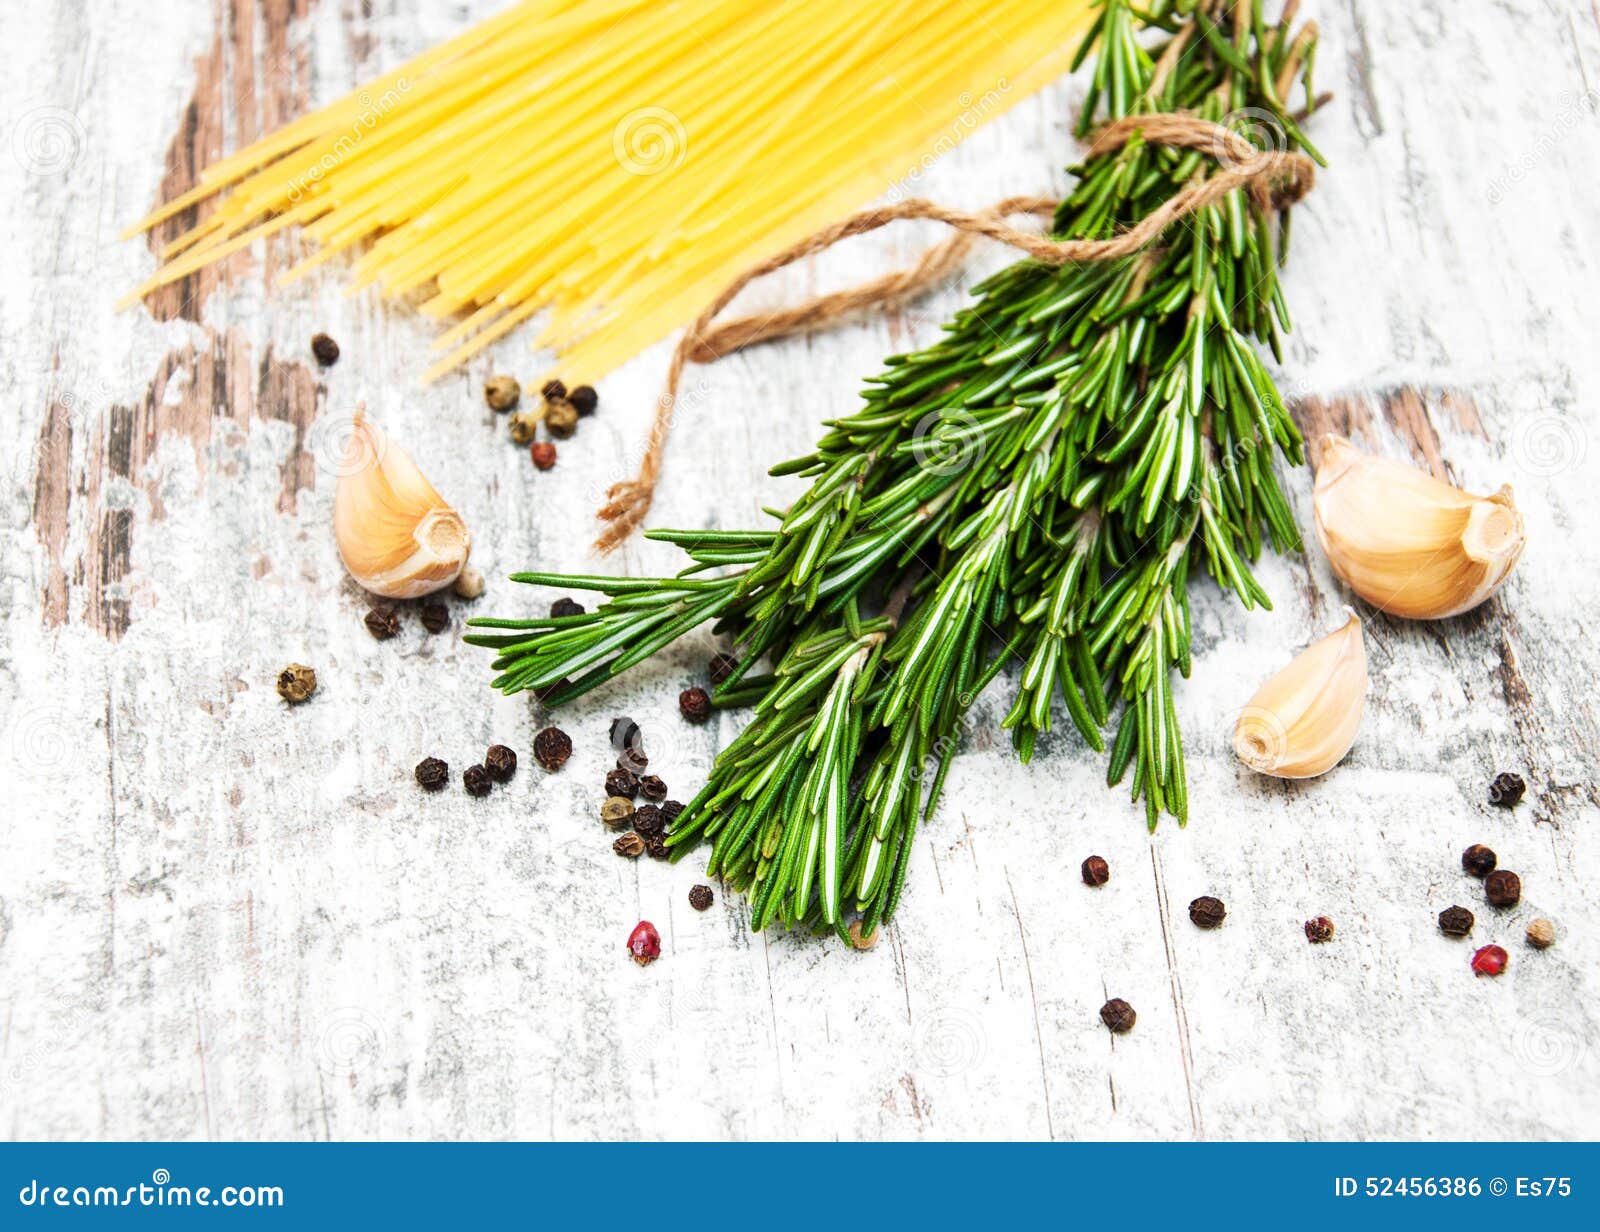 Pasta ingredients stock photo. Image of vegetarian, lunch - 52456386